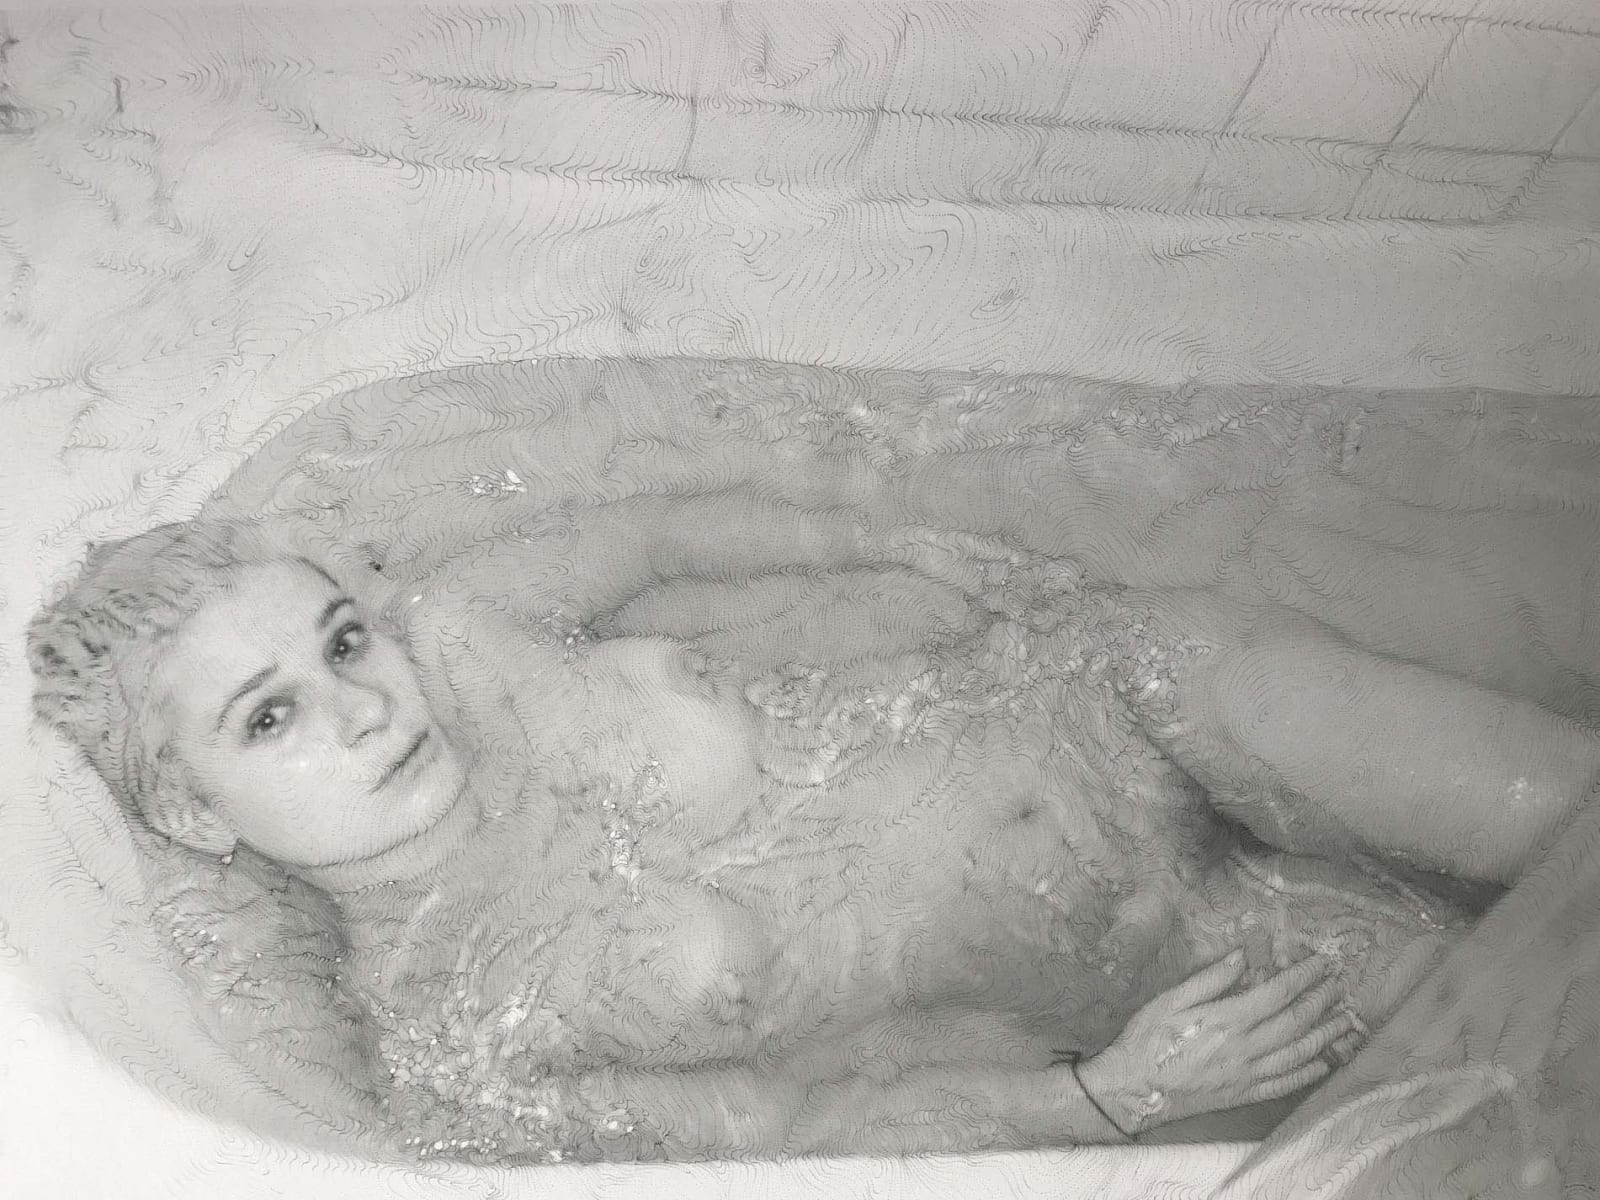 Sebastiaan Bremer Ave Maria 29 nude woman in bathtub gray dot image